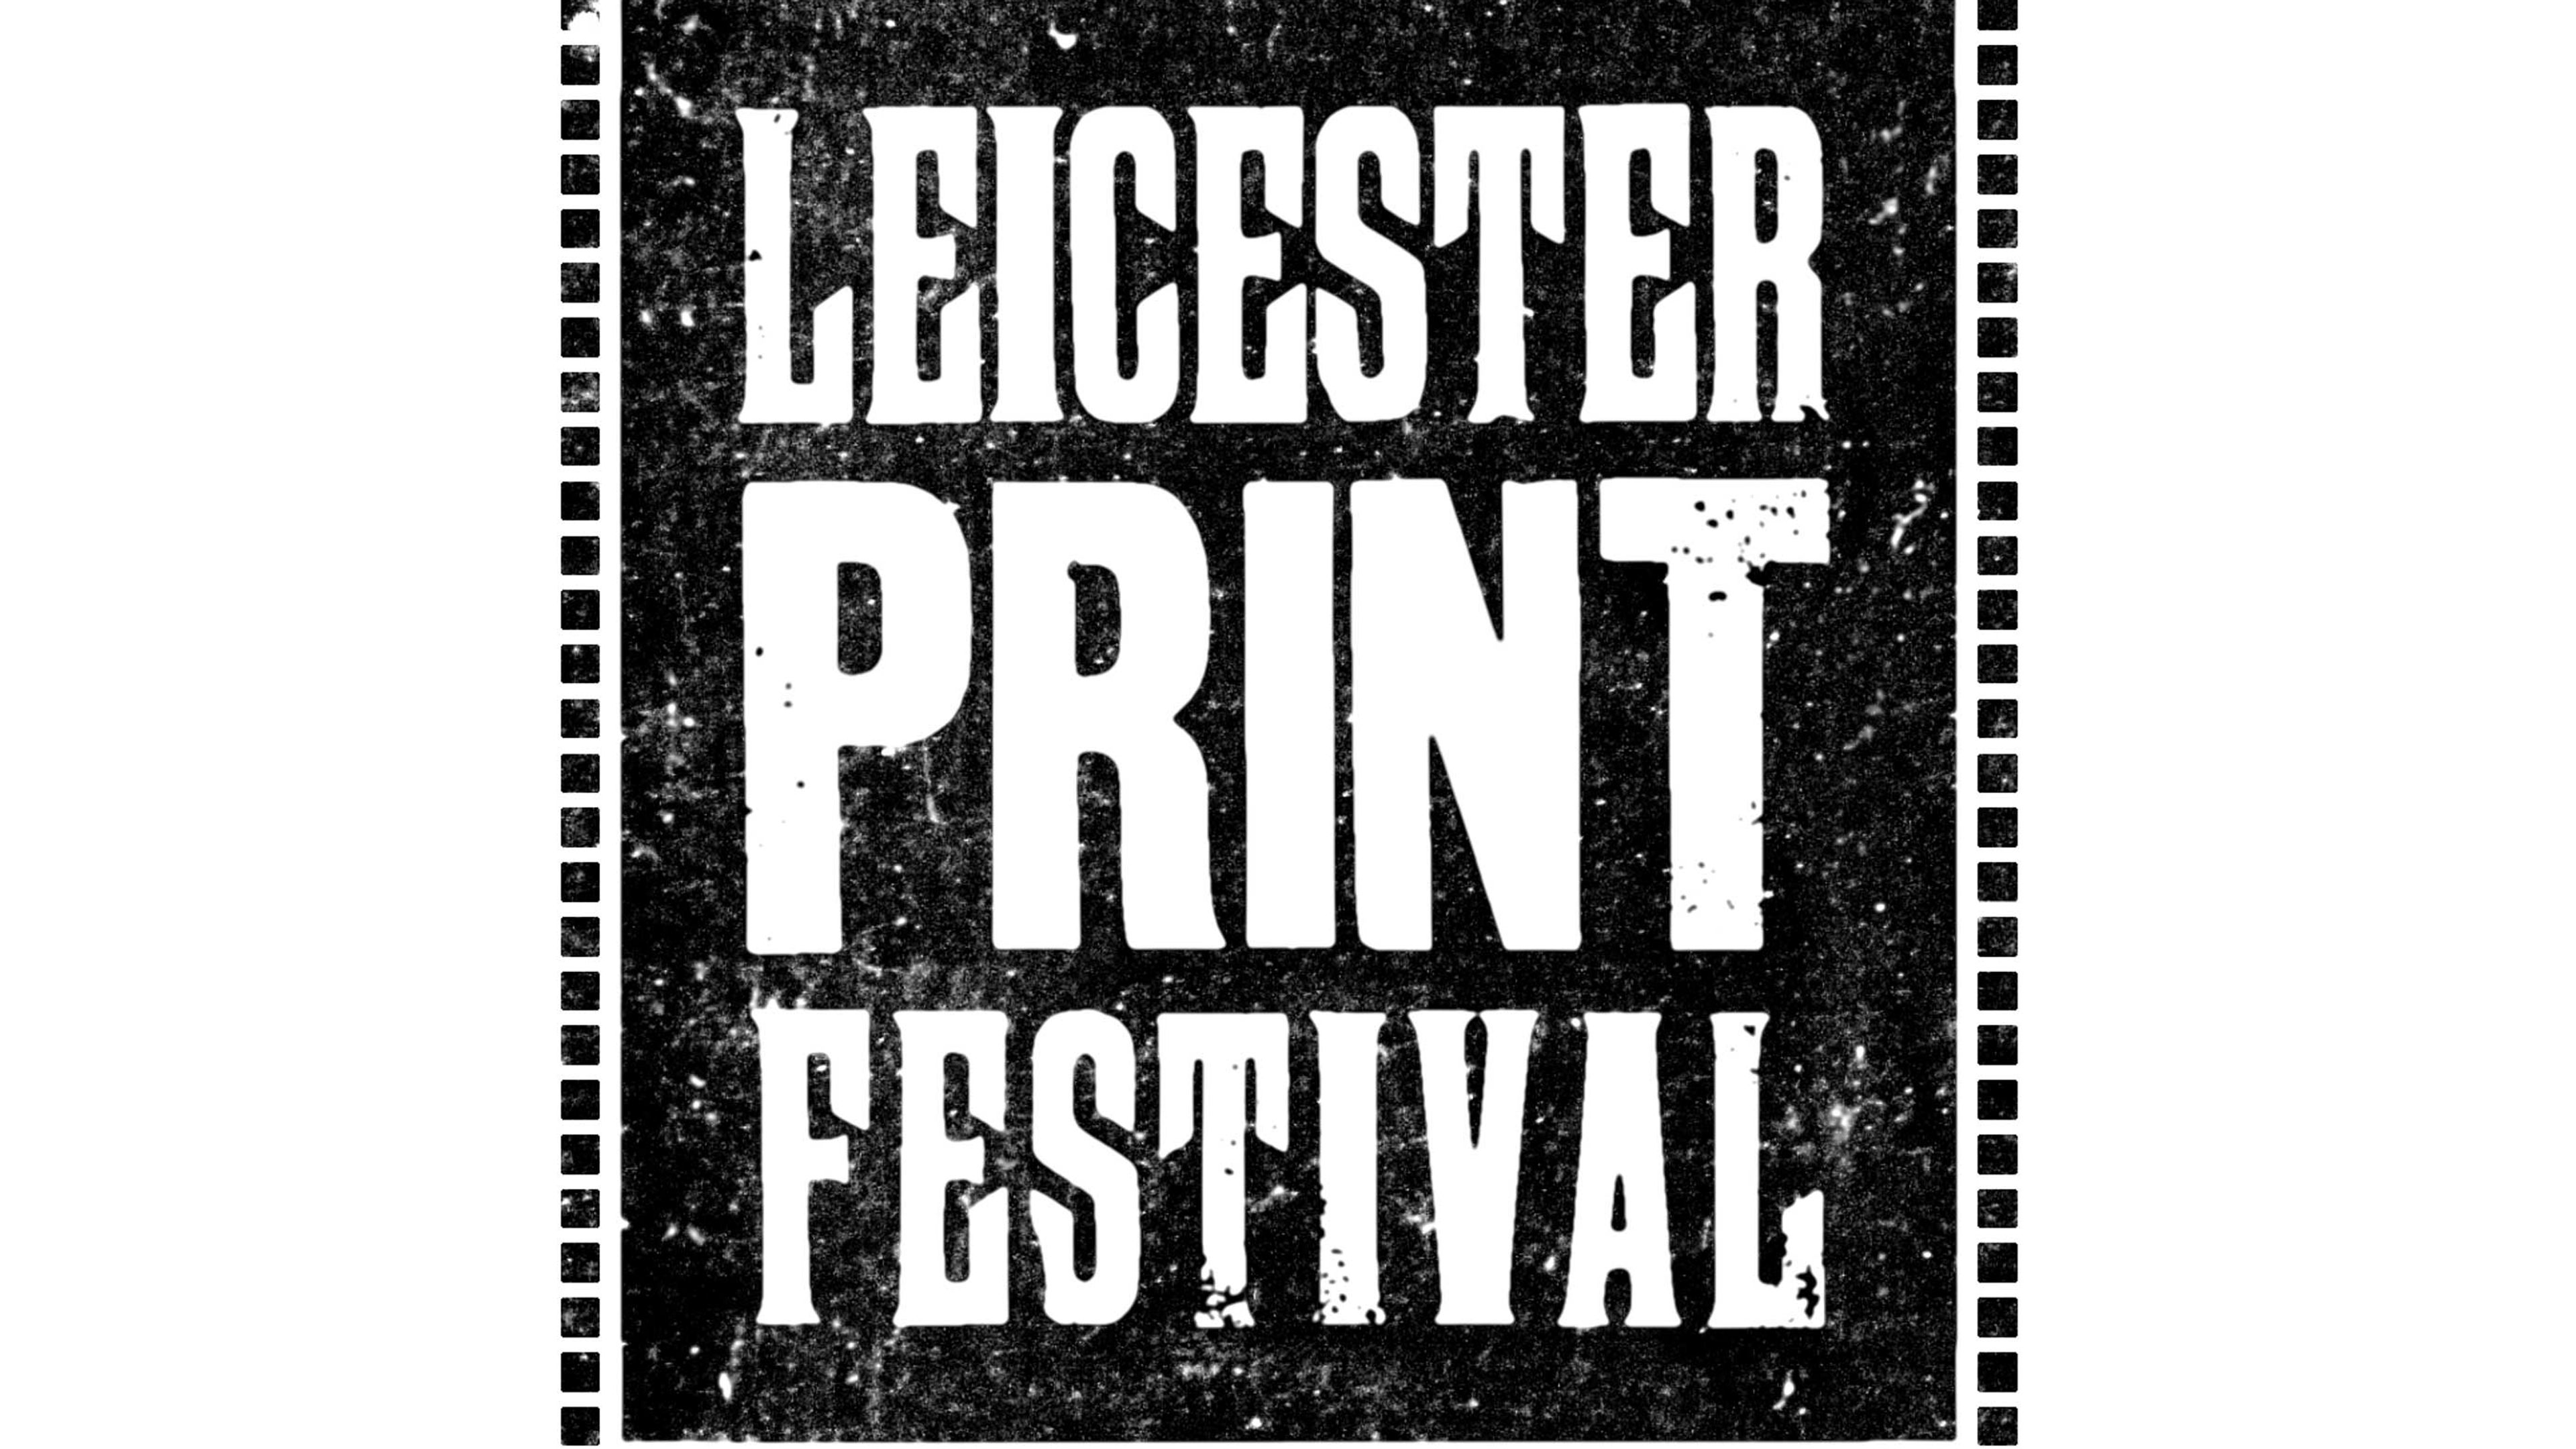 Leicester Print Festival